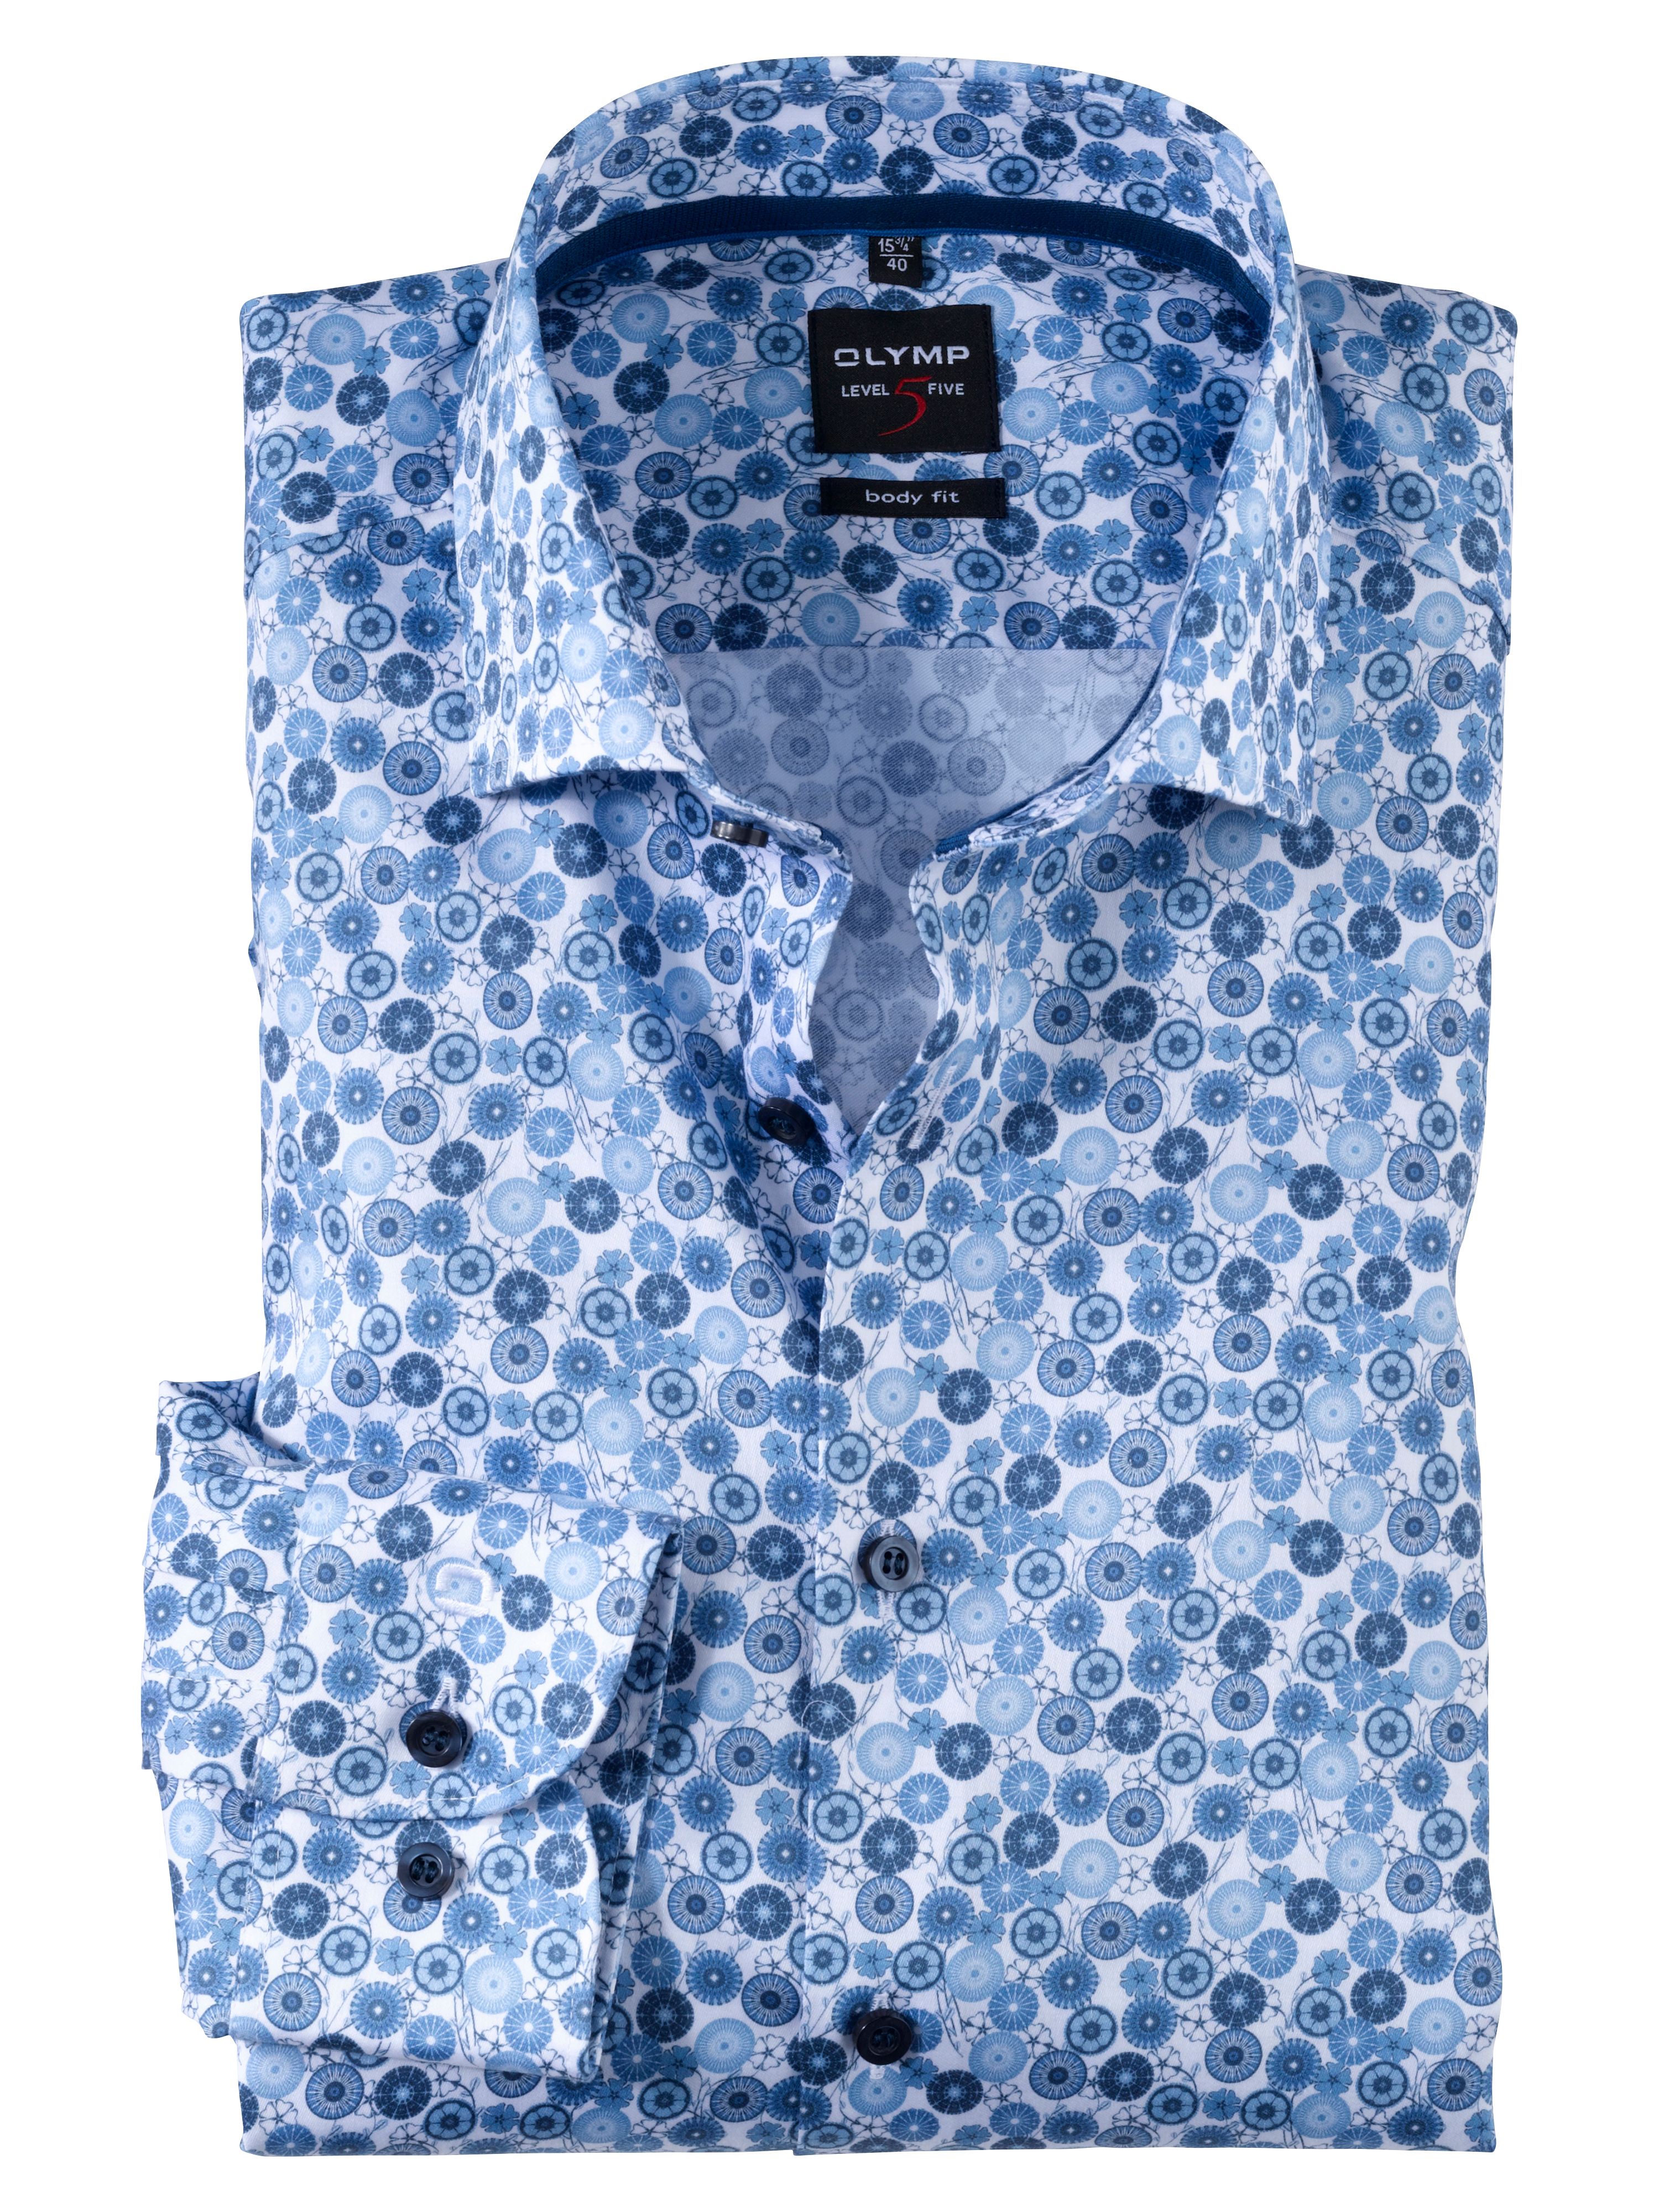 Kalmerend duim Great Barrier Reef Overhemd OLYMP Level Five body fit koningsblauw online bestellen | Henri's  Fashion